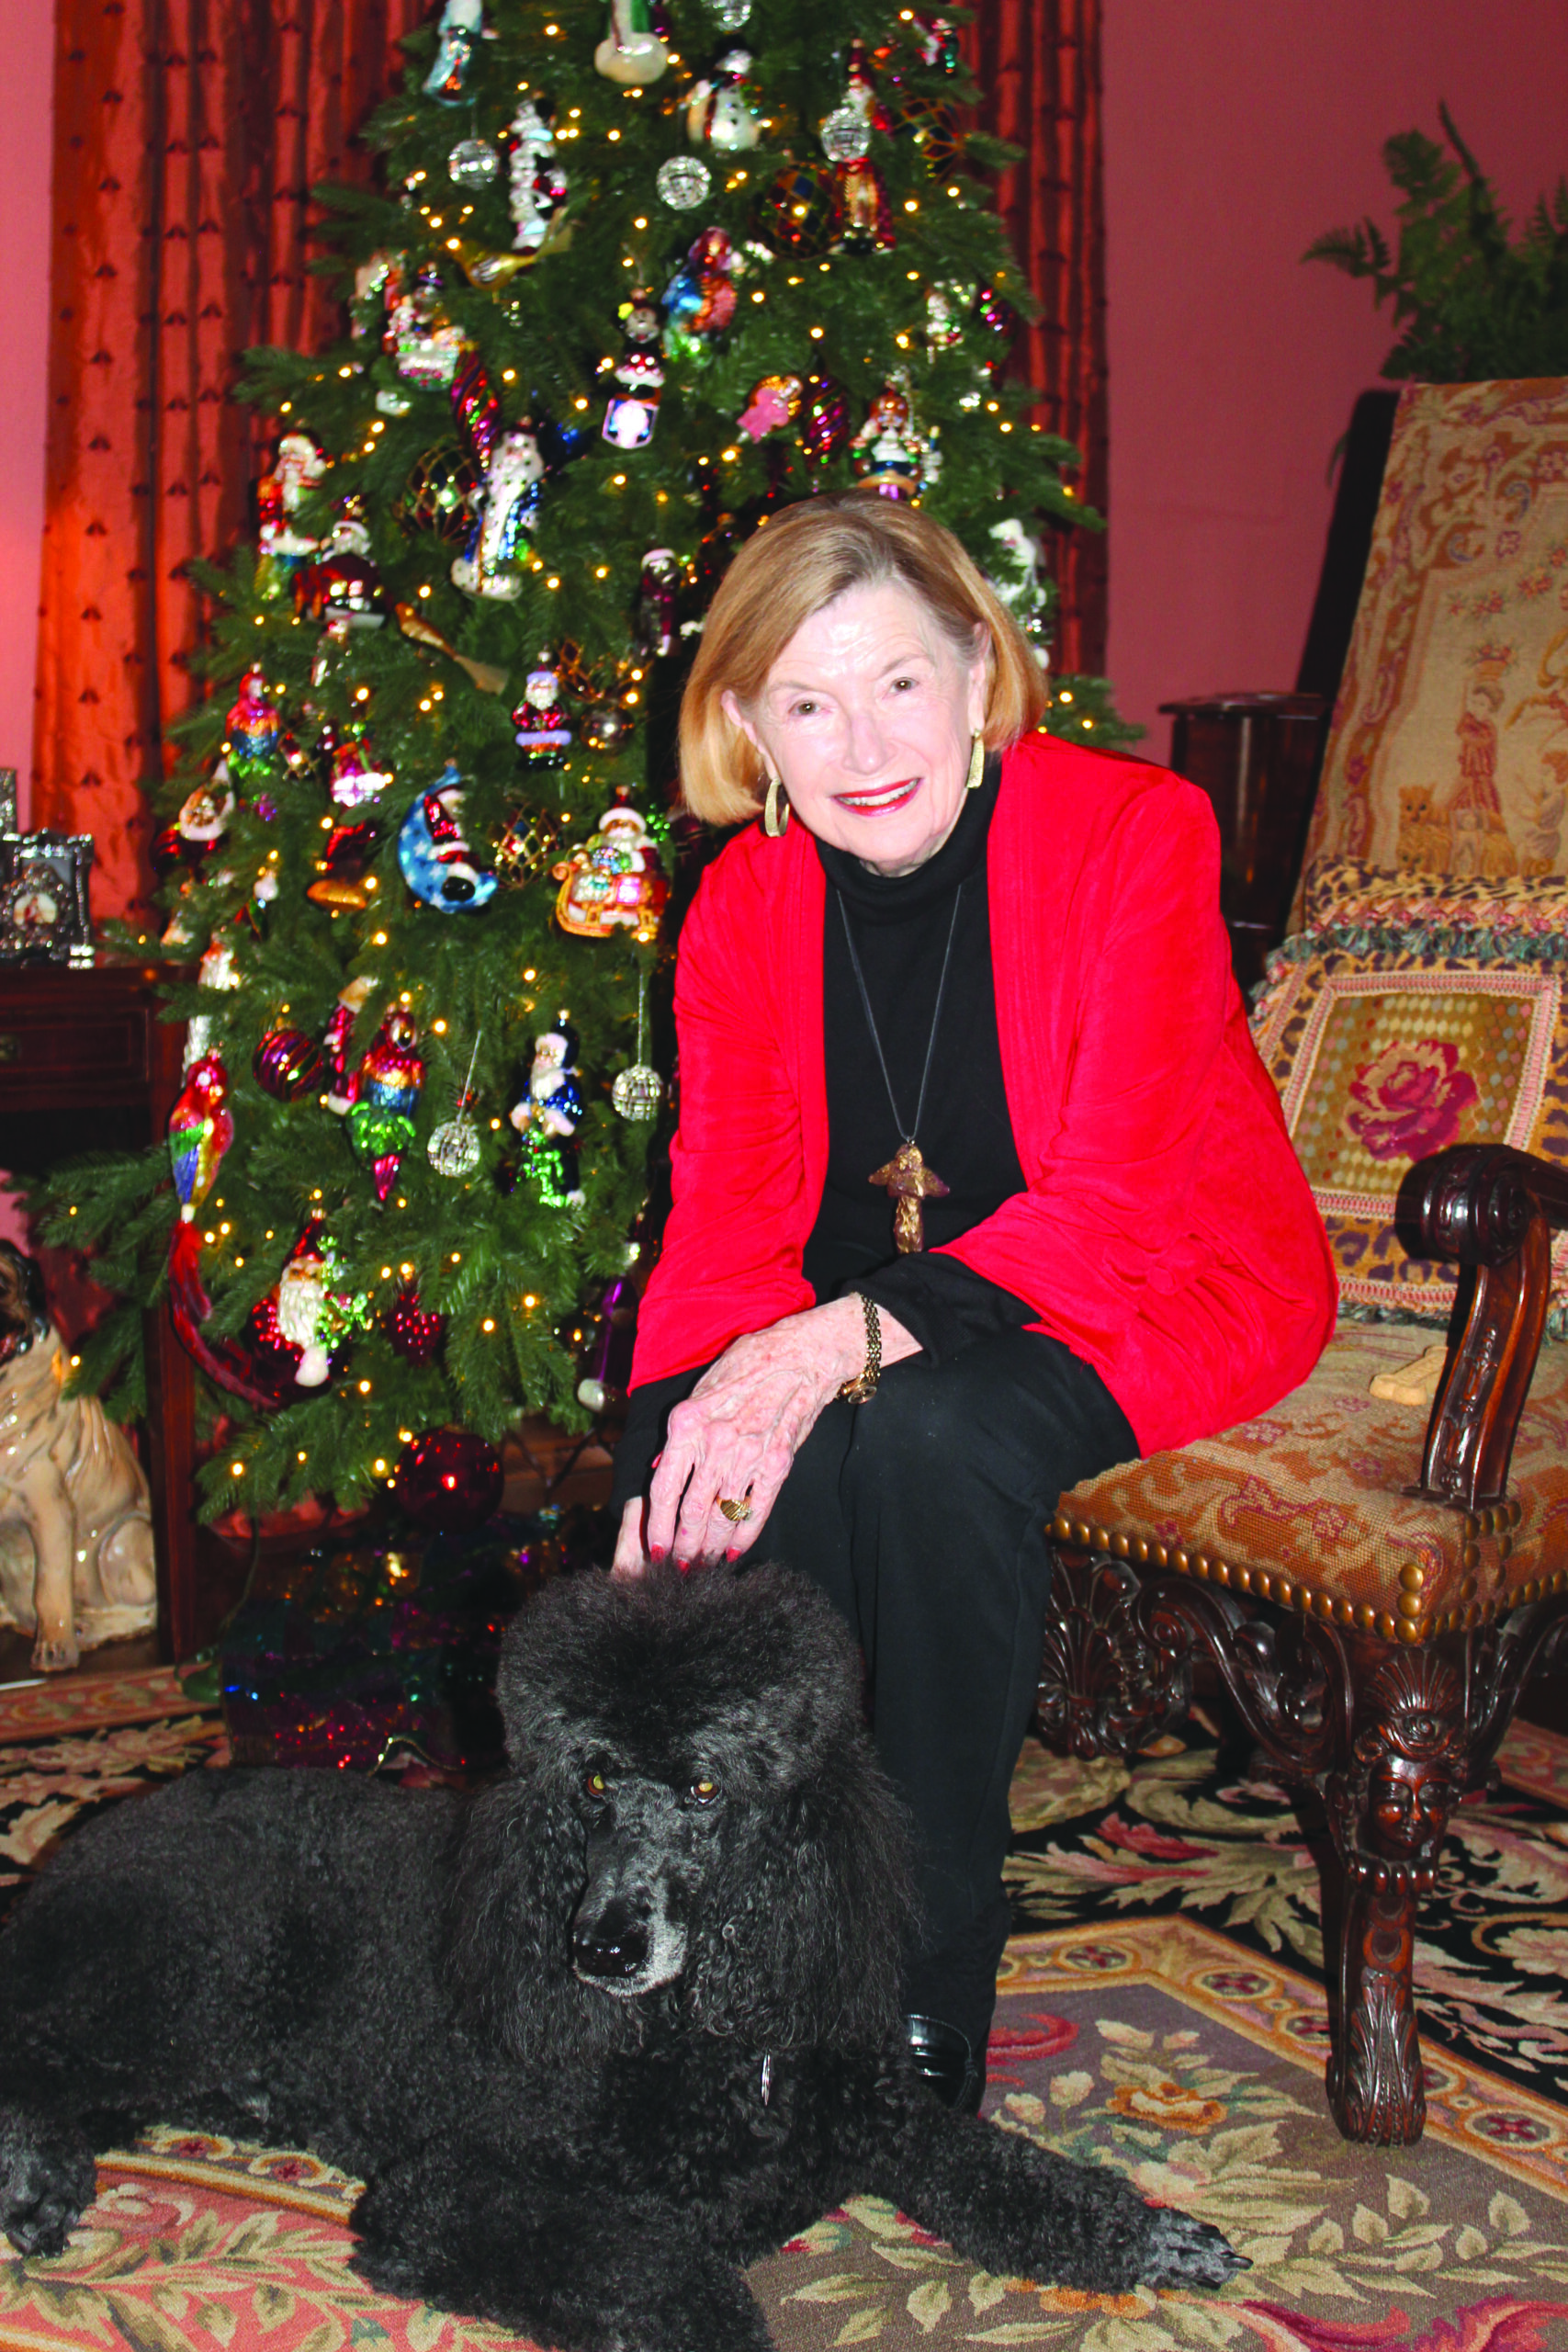 Ann Fuller enjoys decorating at Christmas